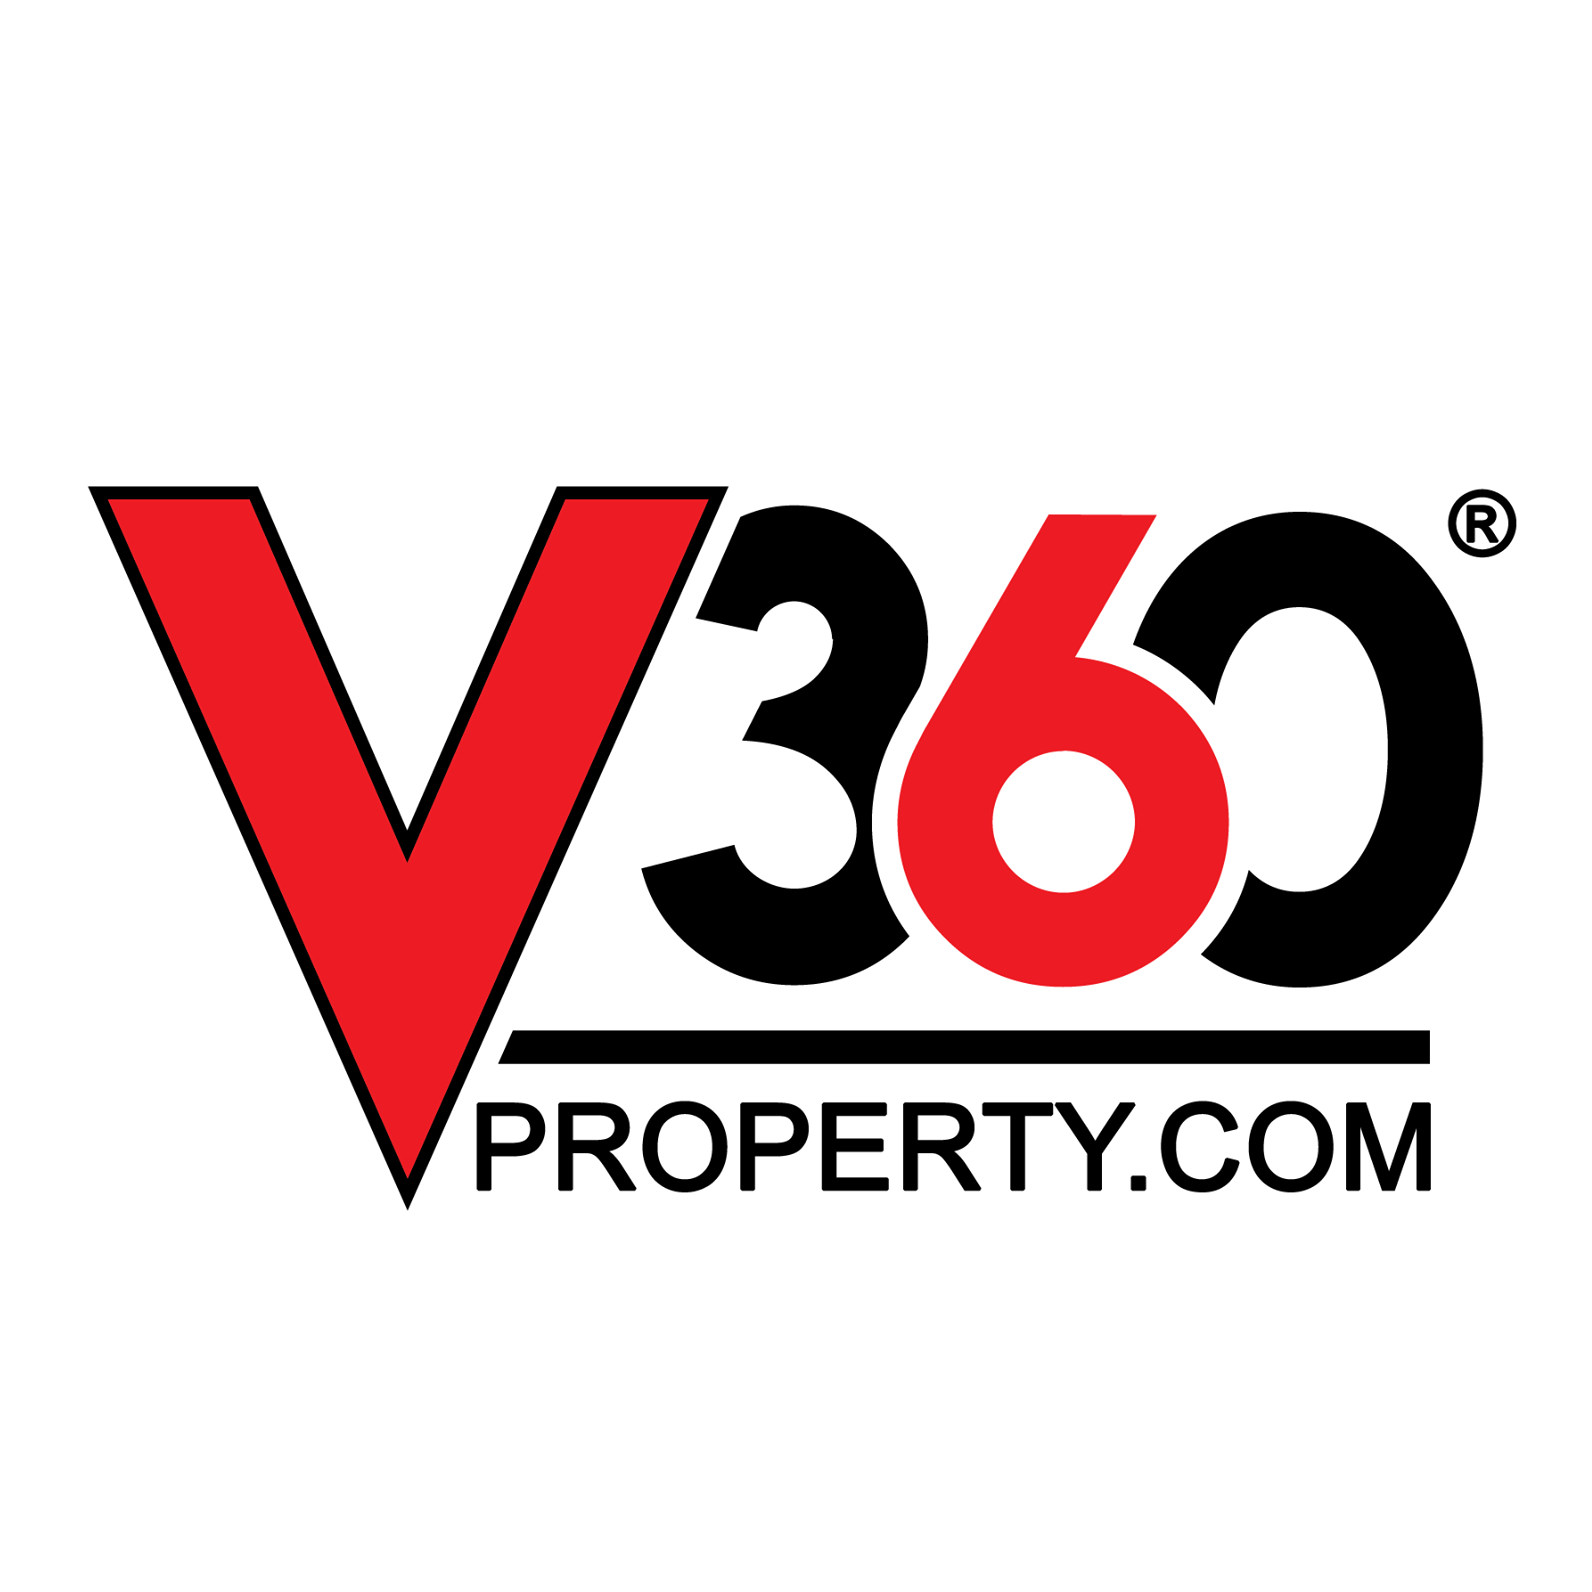 V360 Property